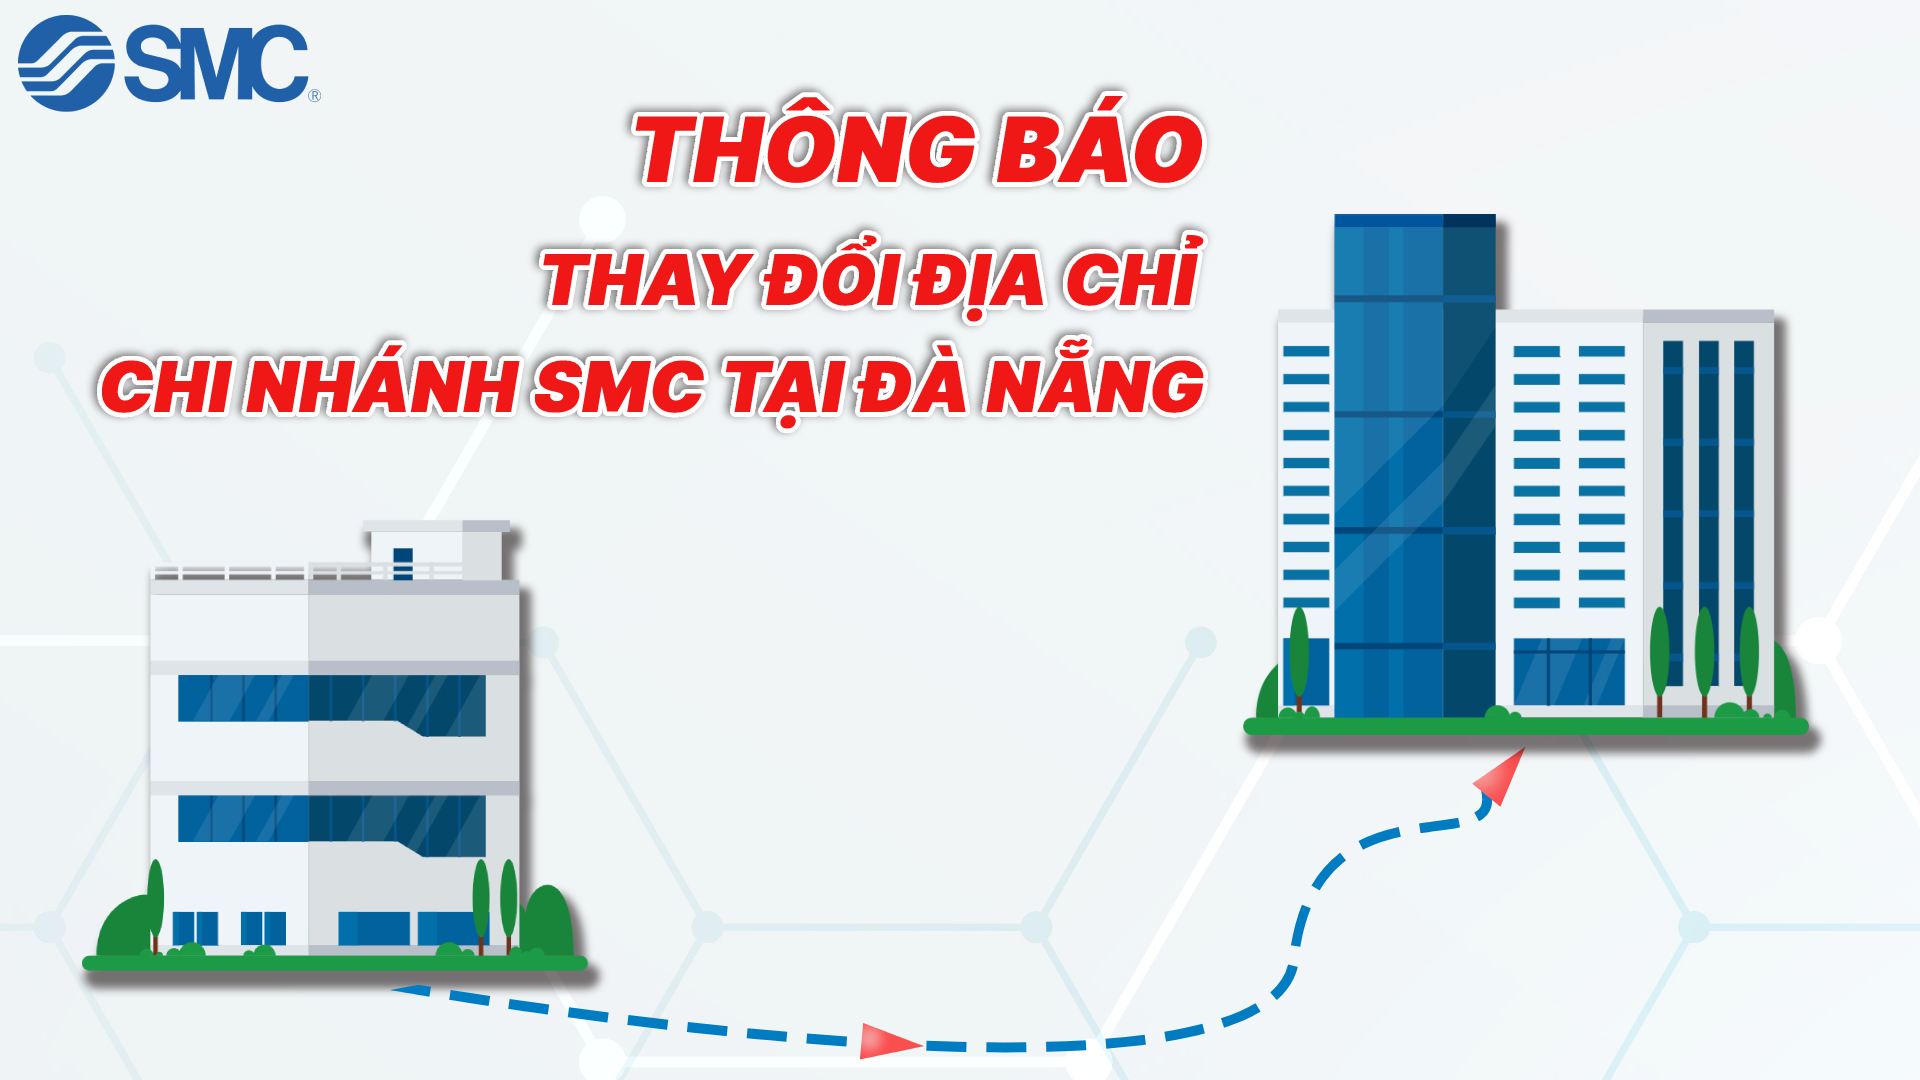 Change address of Da Nang branch office